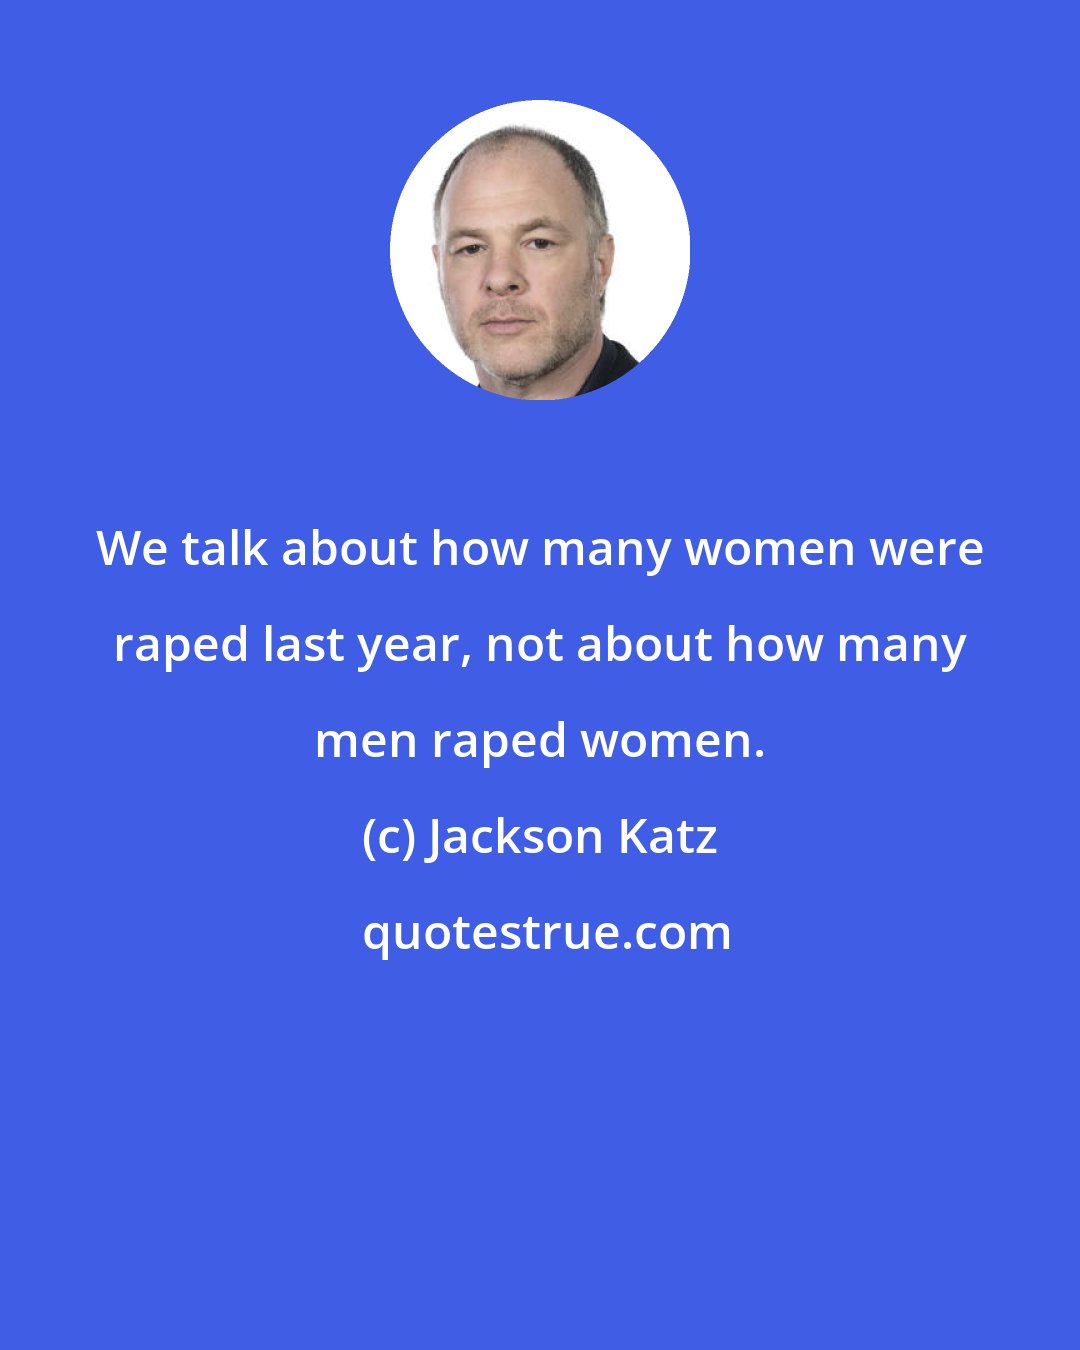 Jackson Katz: We talk about how many women were raped last year, not about how many men raped women.